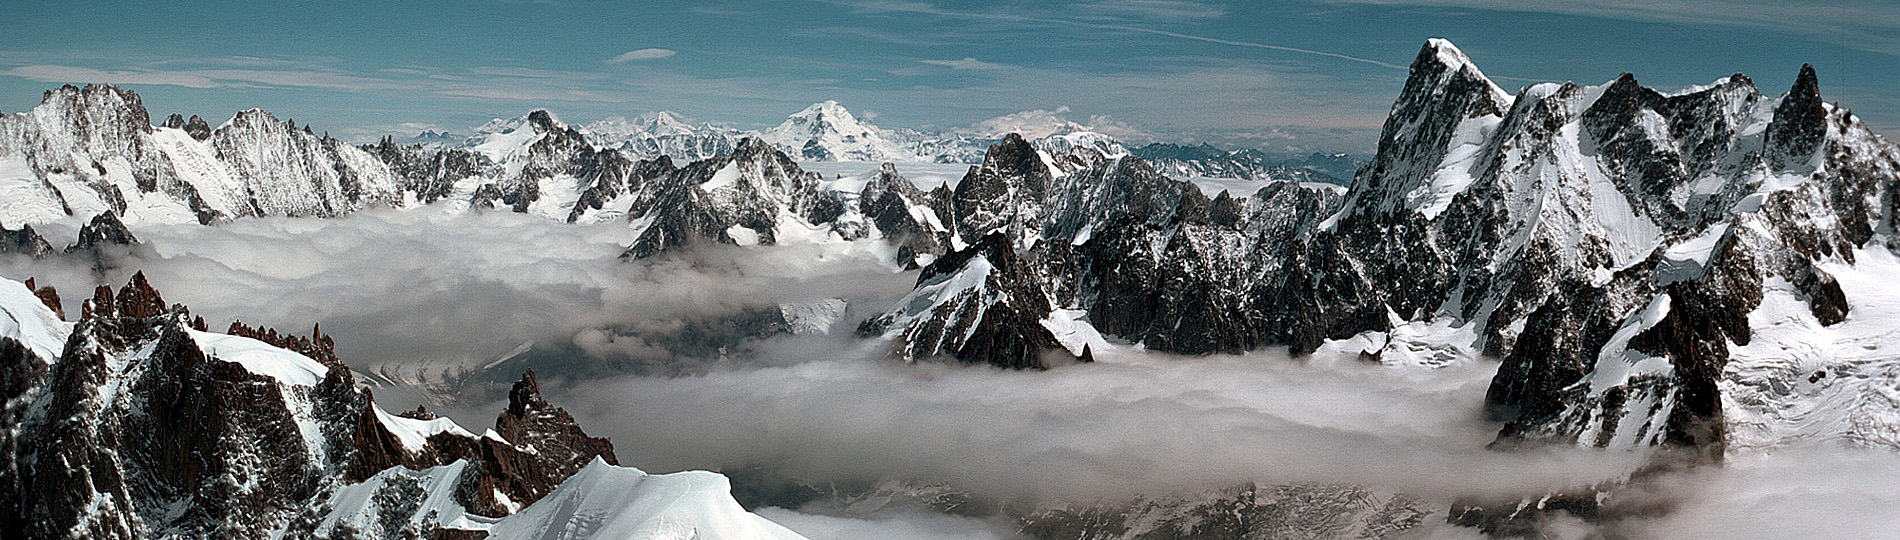 Alps - Massif of Mont Blanc